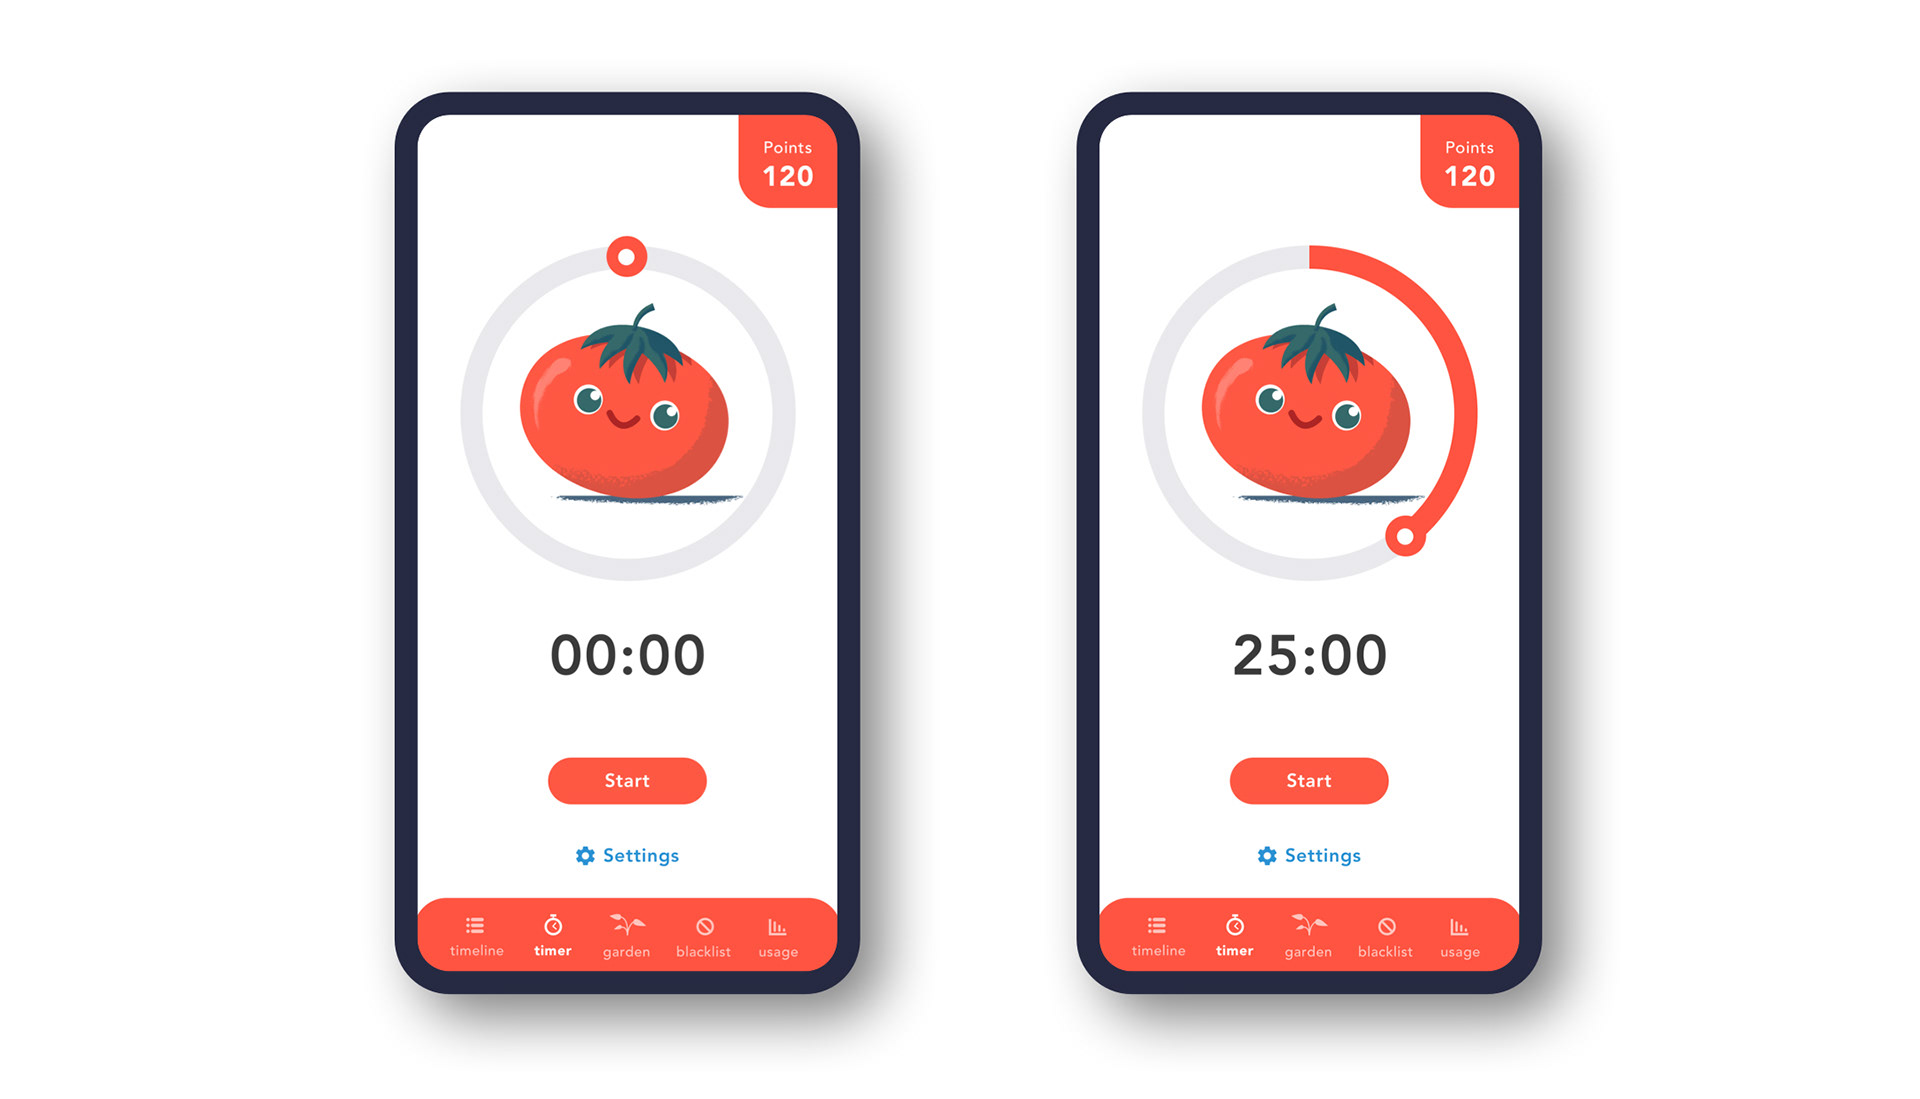 pomodoro timer tomato timercom